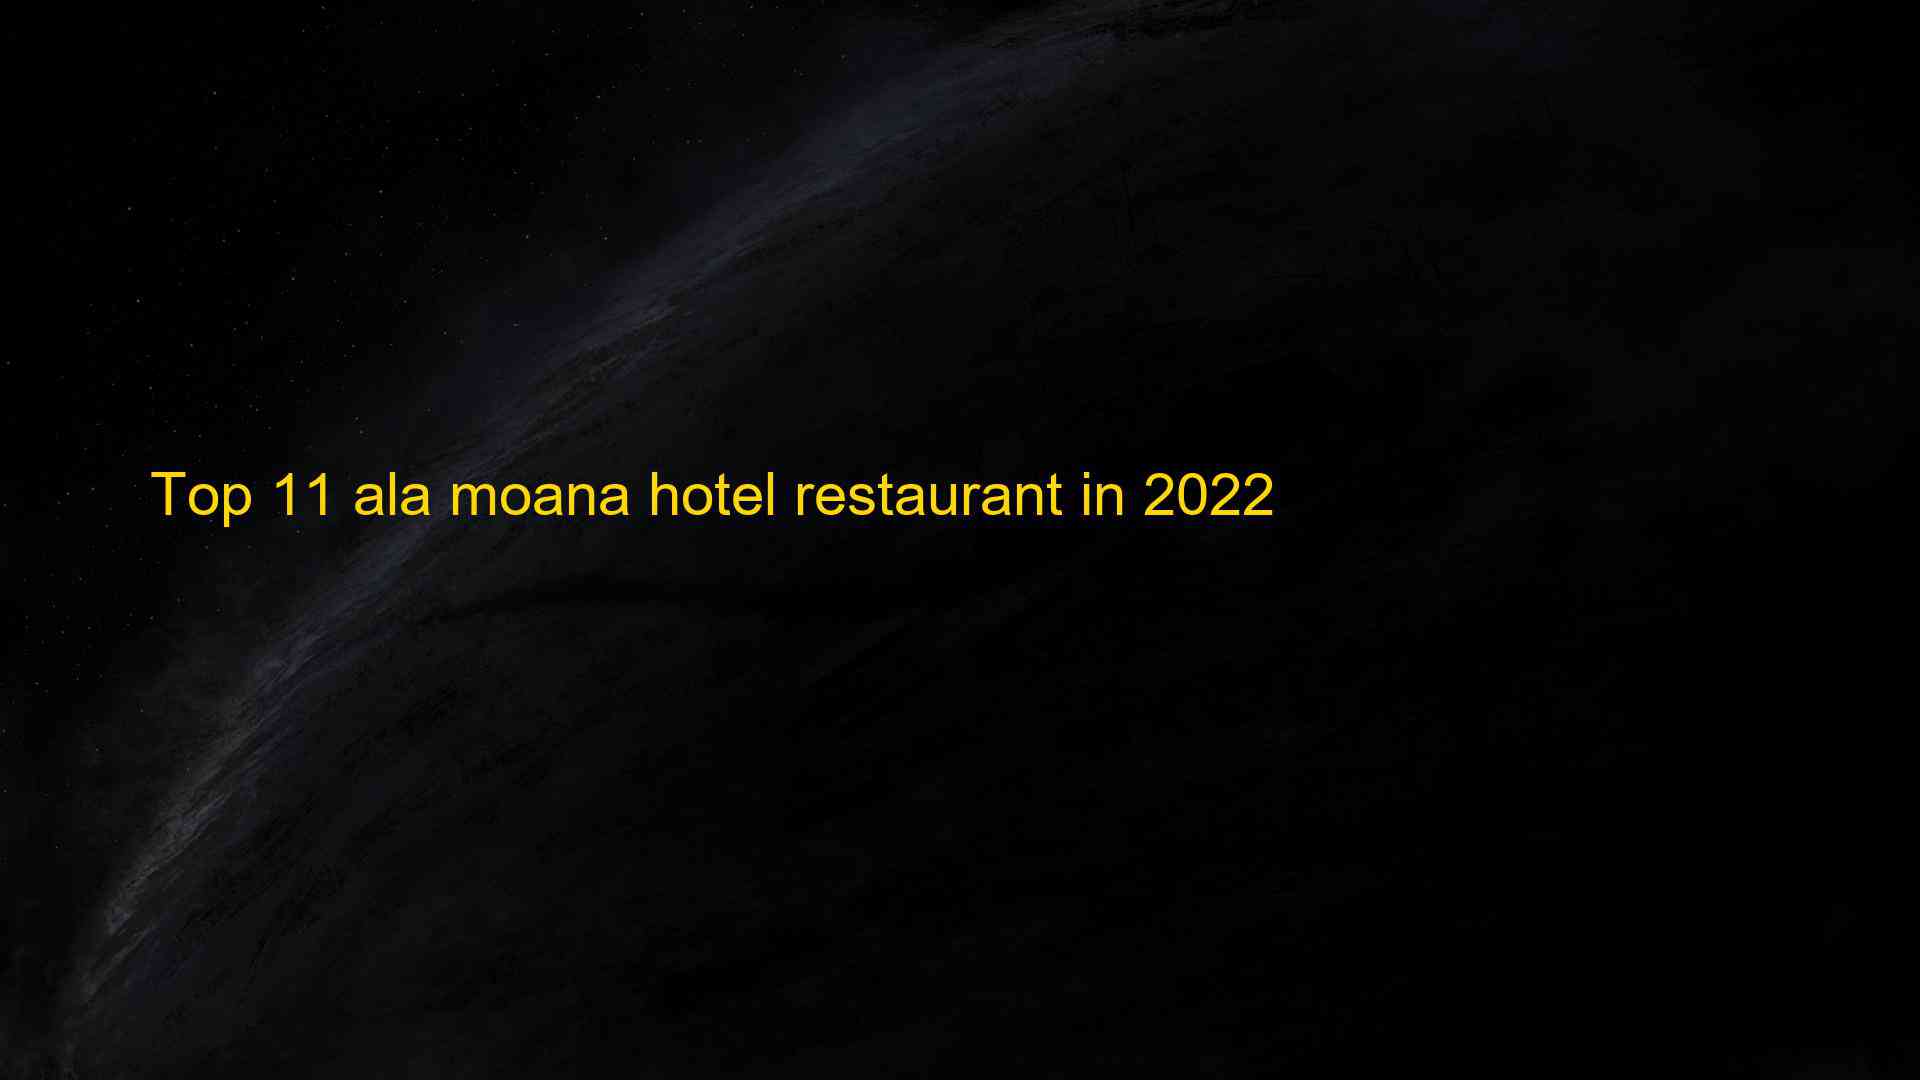 Top 11 ala moana hotel restaurant in 2022 1663523692